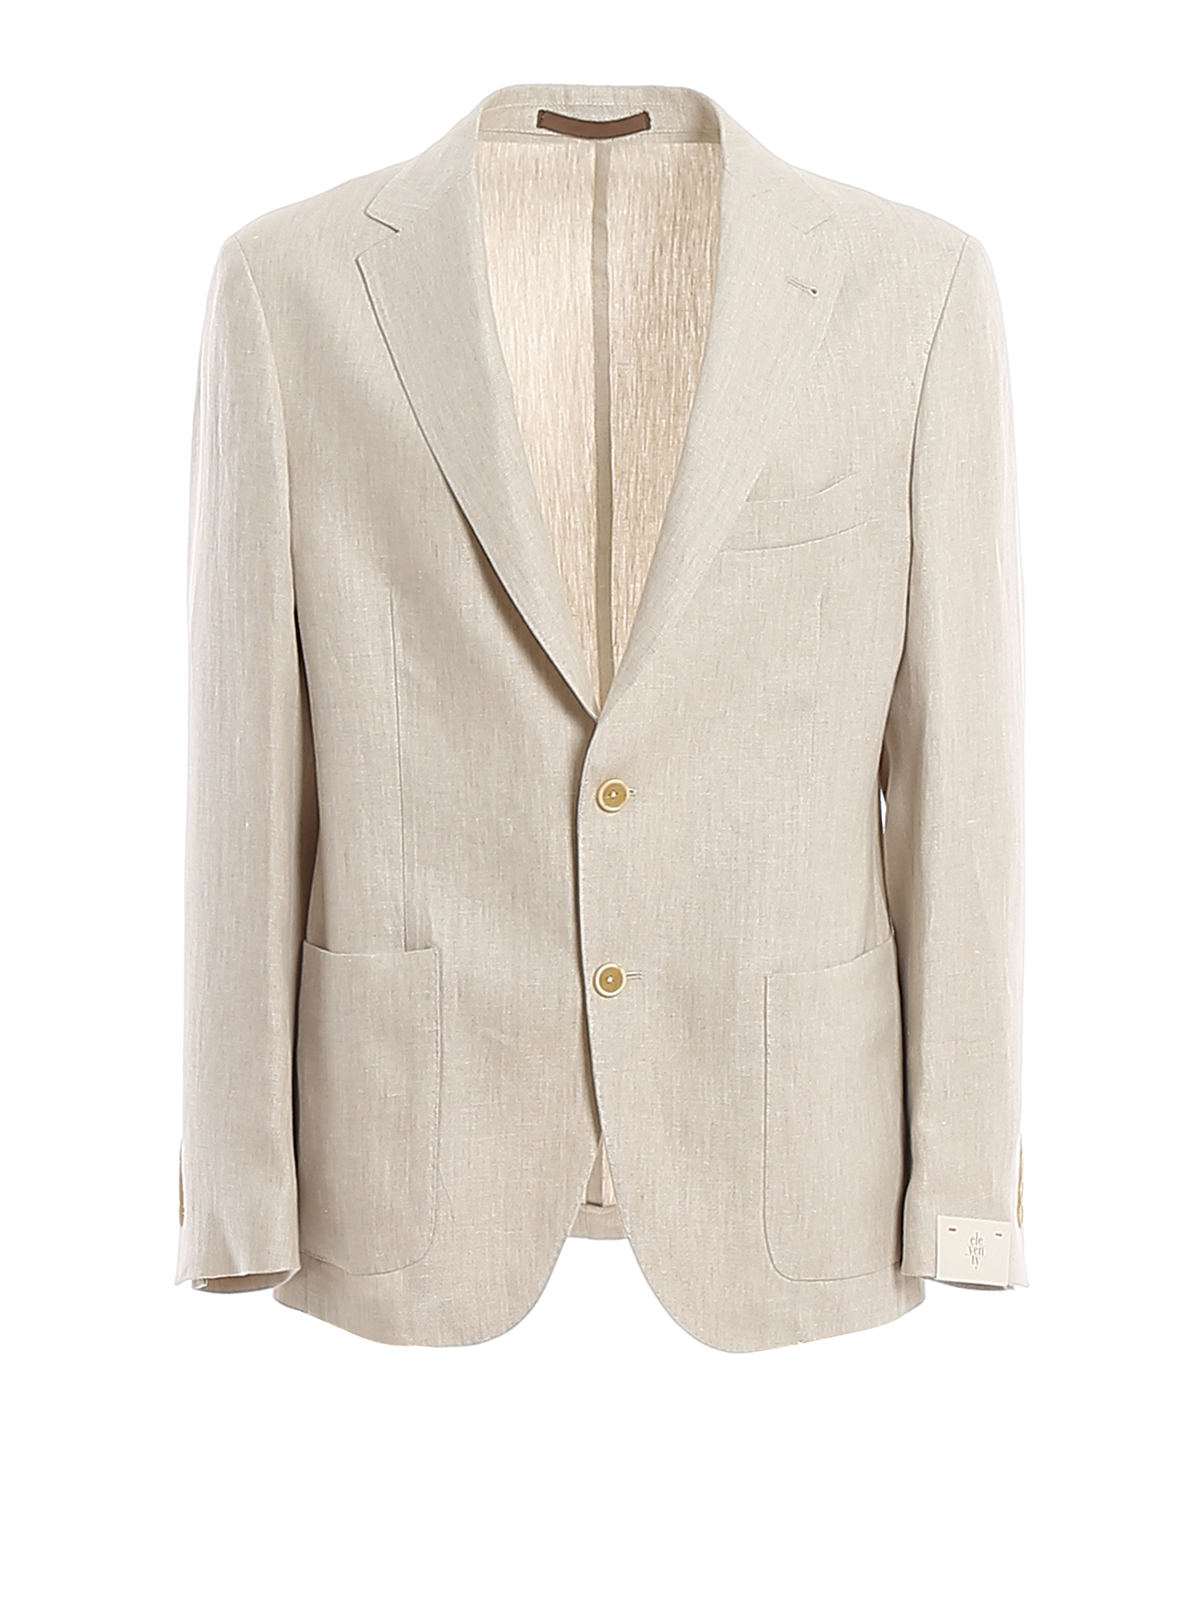 KLJR Men Linen Flap Pockets Solid Two Button Slim Fit Lapel Casual Jackets Coat Blazer